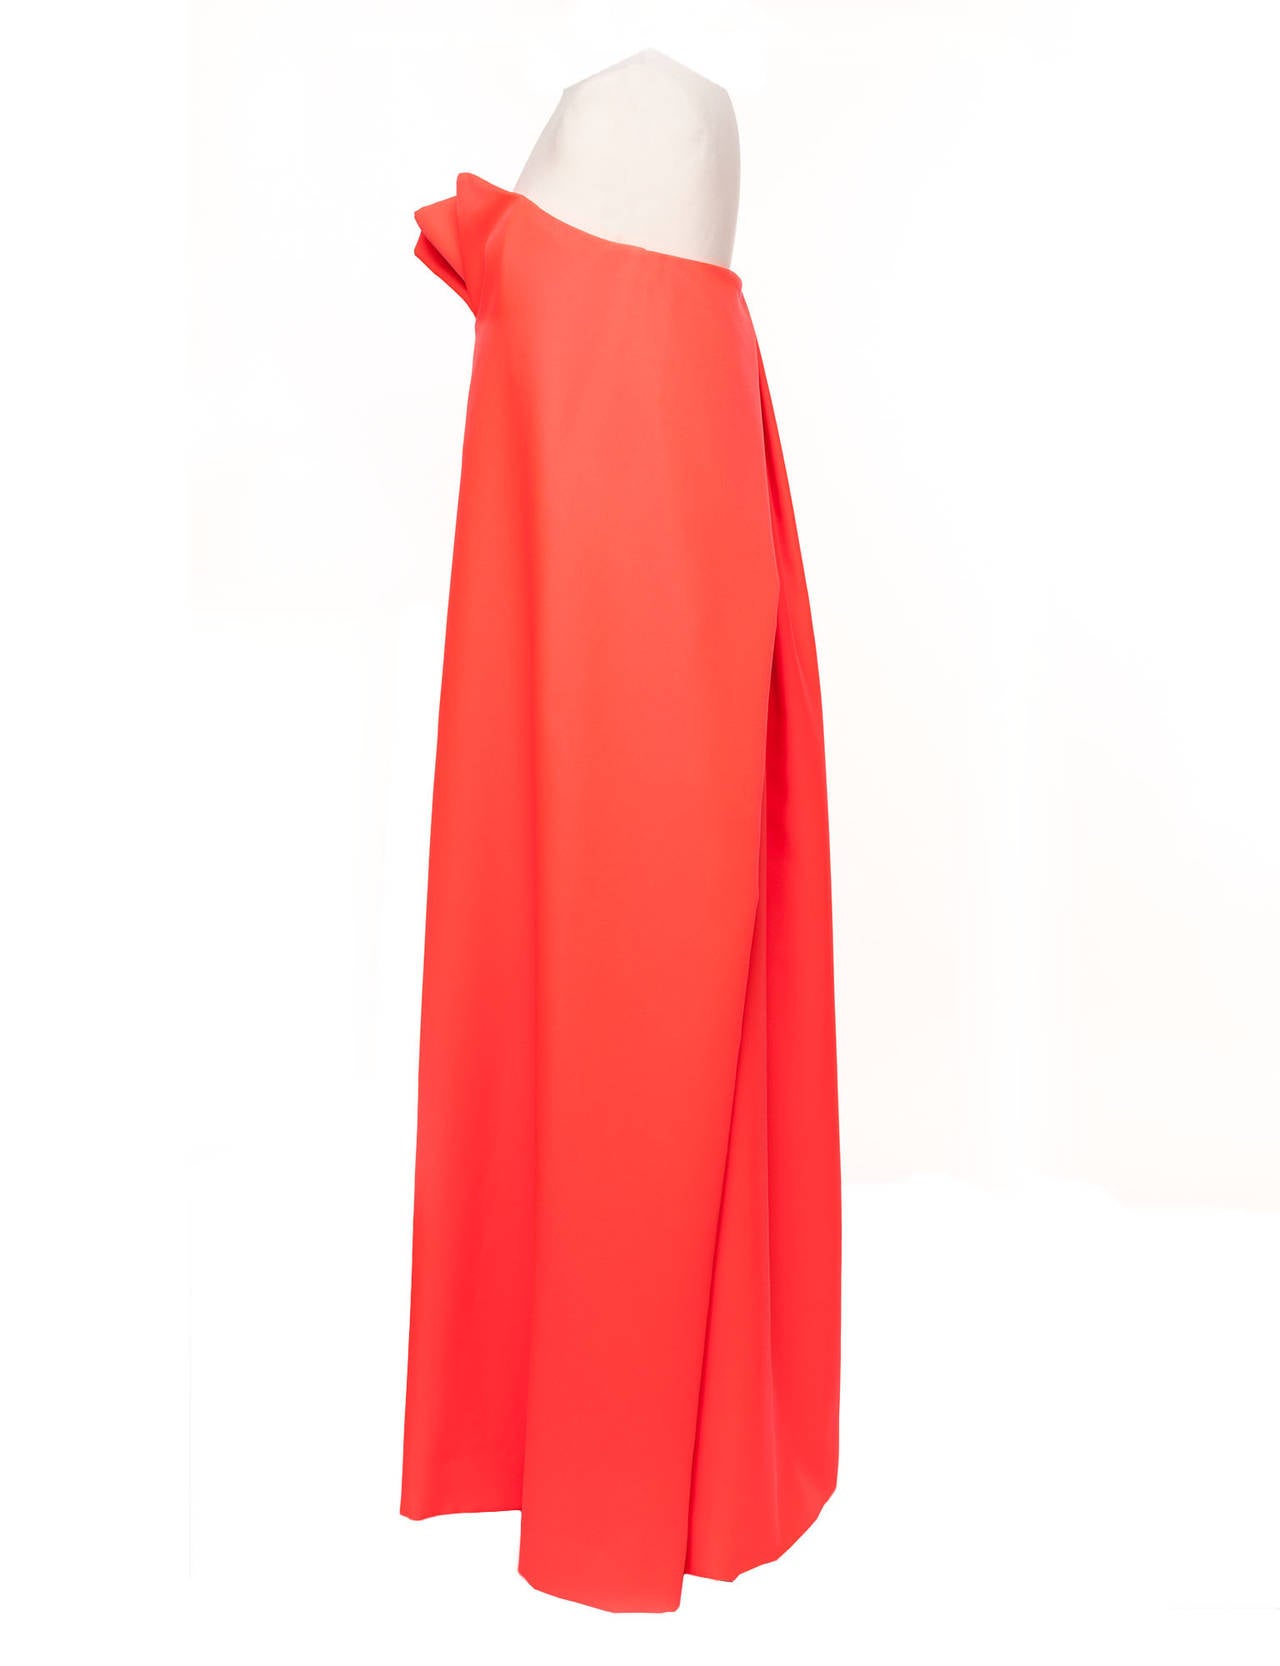 Red Jil Sander by Raf Simons *Trilogy Of Couture* 2009 Neon Robe, Sz. M/L